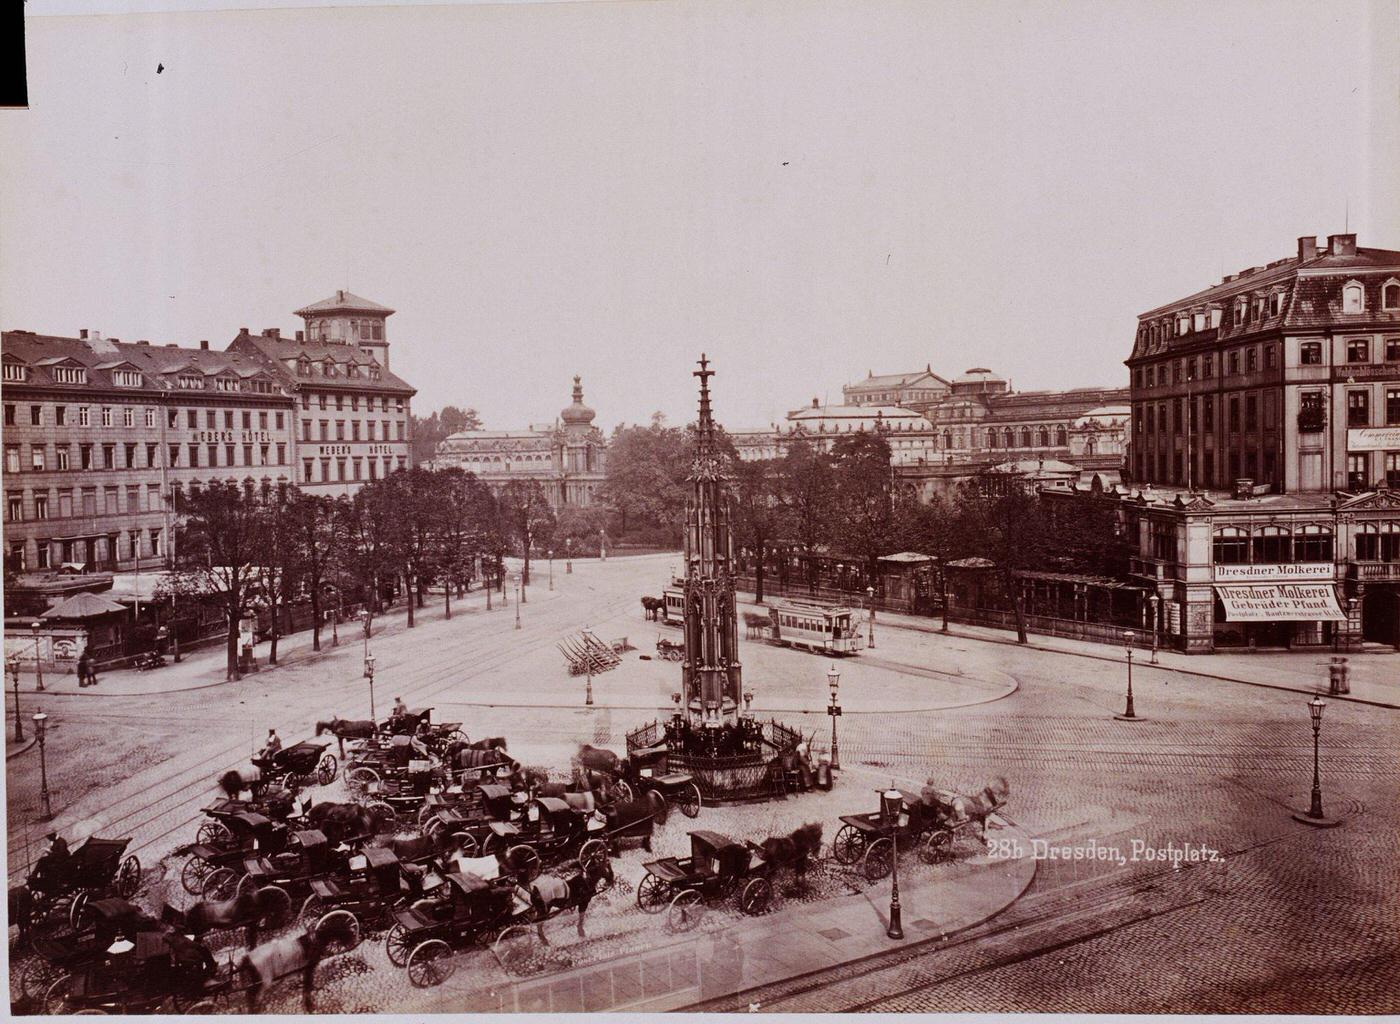 Horse-drawn carriages on Postplatz, Dresden, 1880s.